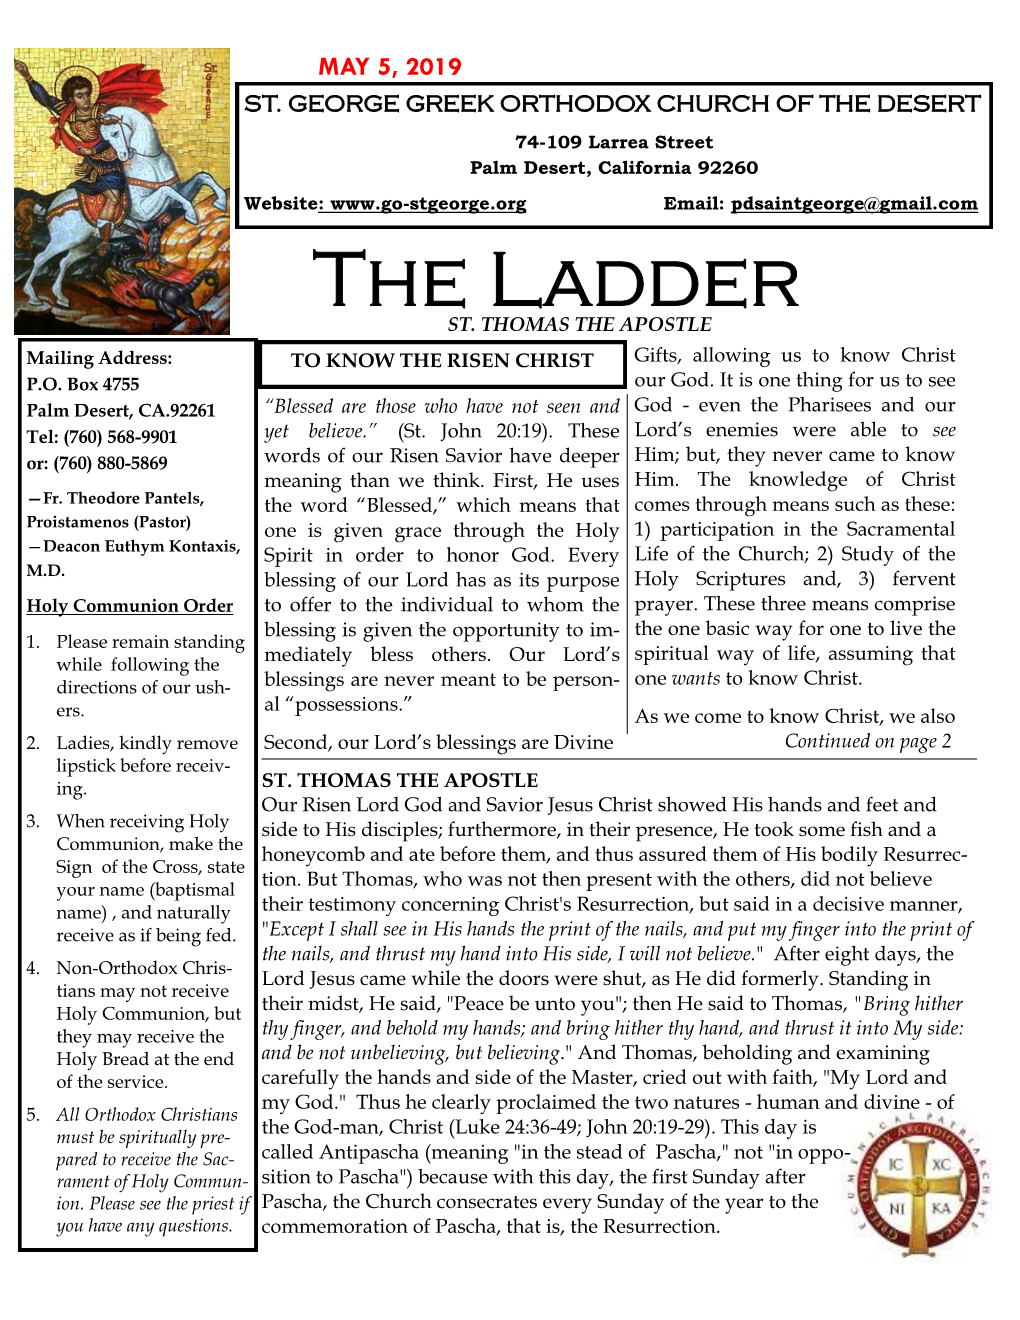 The Ladder ST